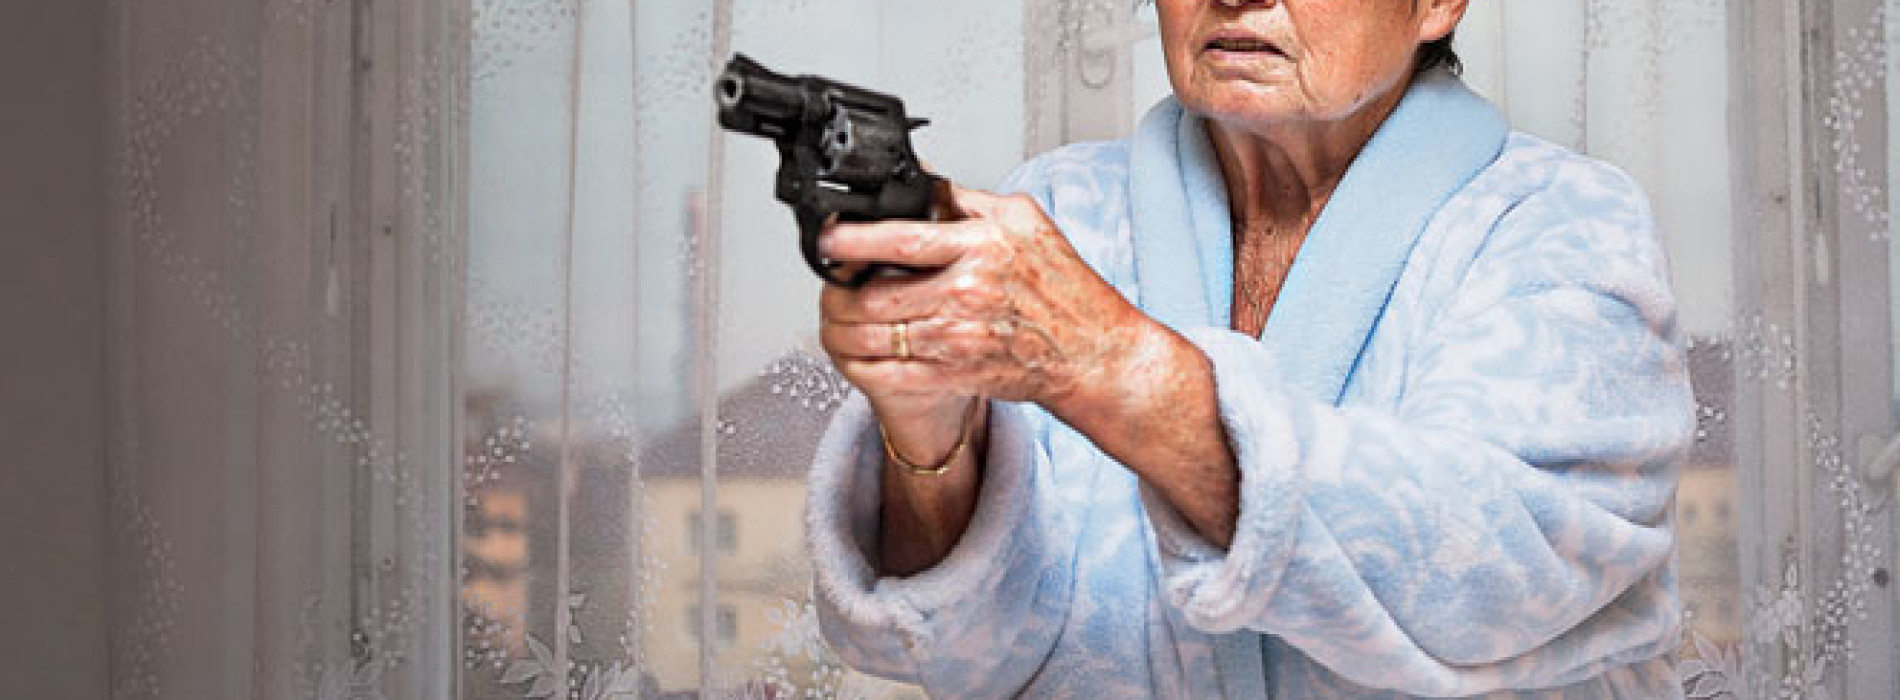 Watch Your Guns, Social Security Recipients